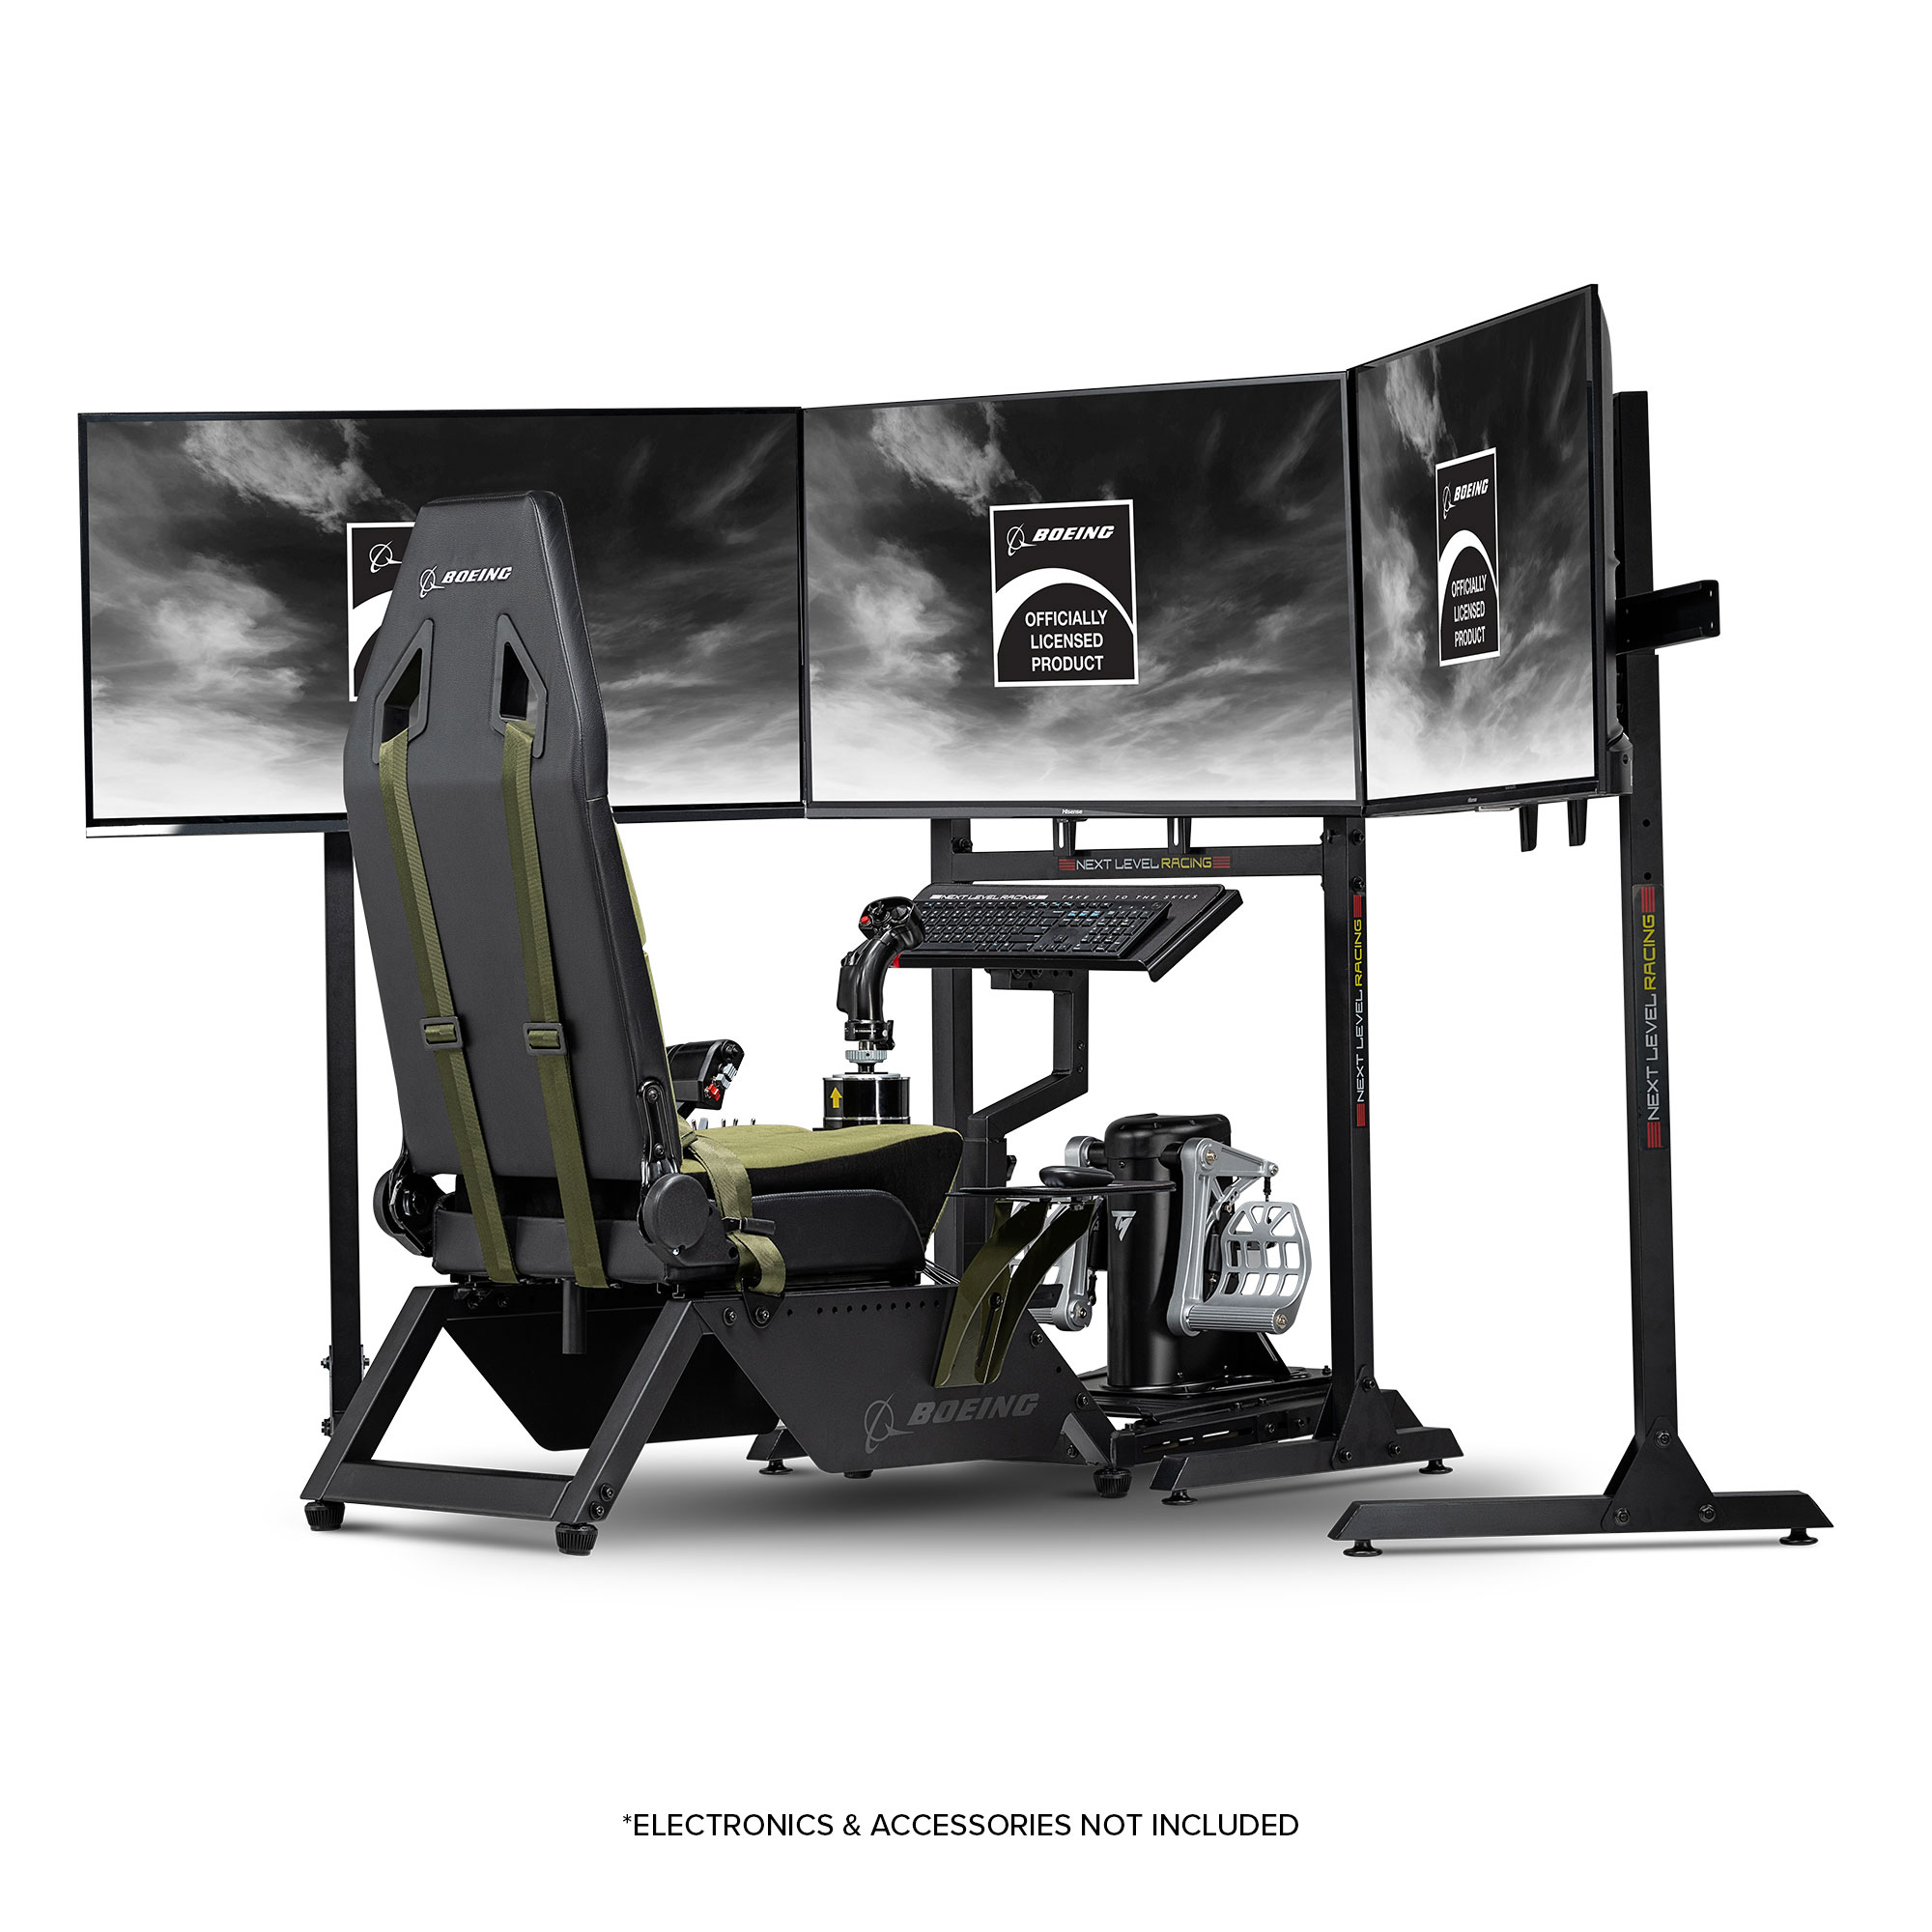 Next Level Racing - Flight Simulator Boeing Military Edition